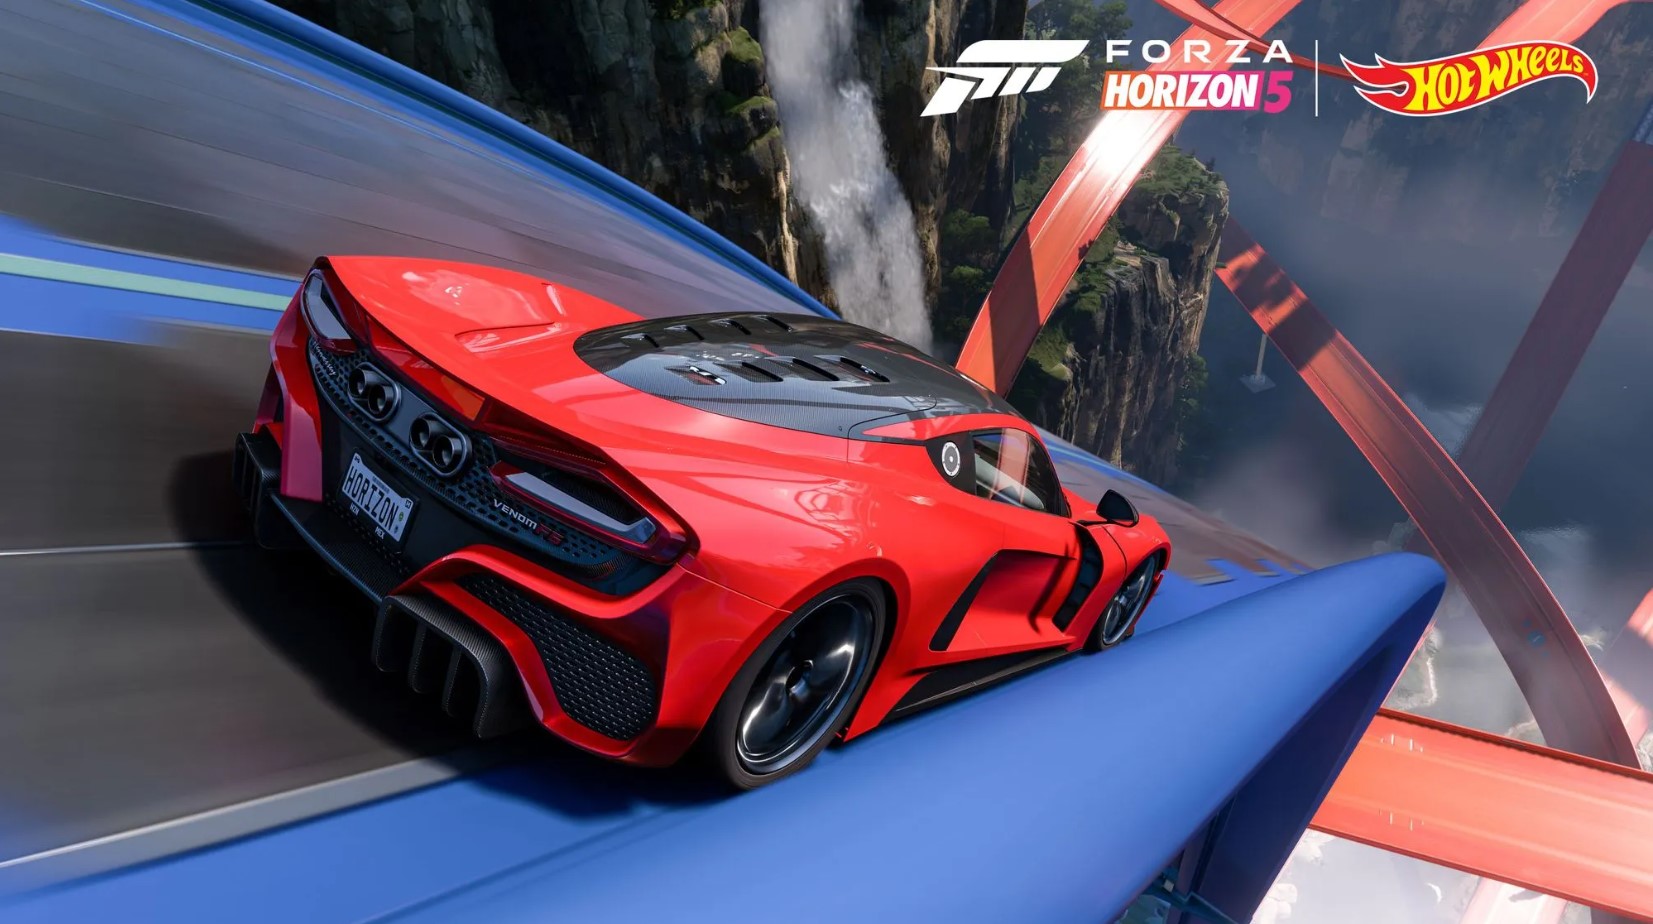 Forza Horizon 5: Hot Wheels - Metacritic